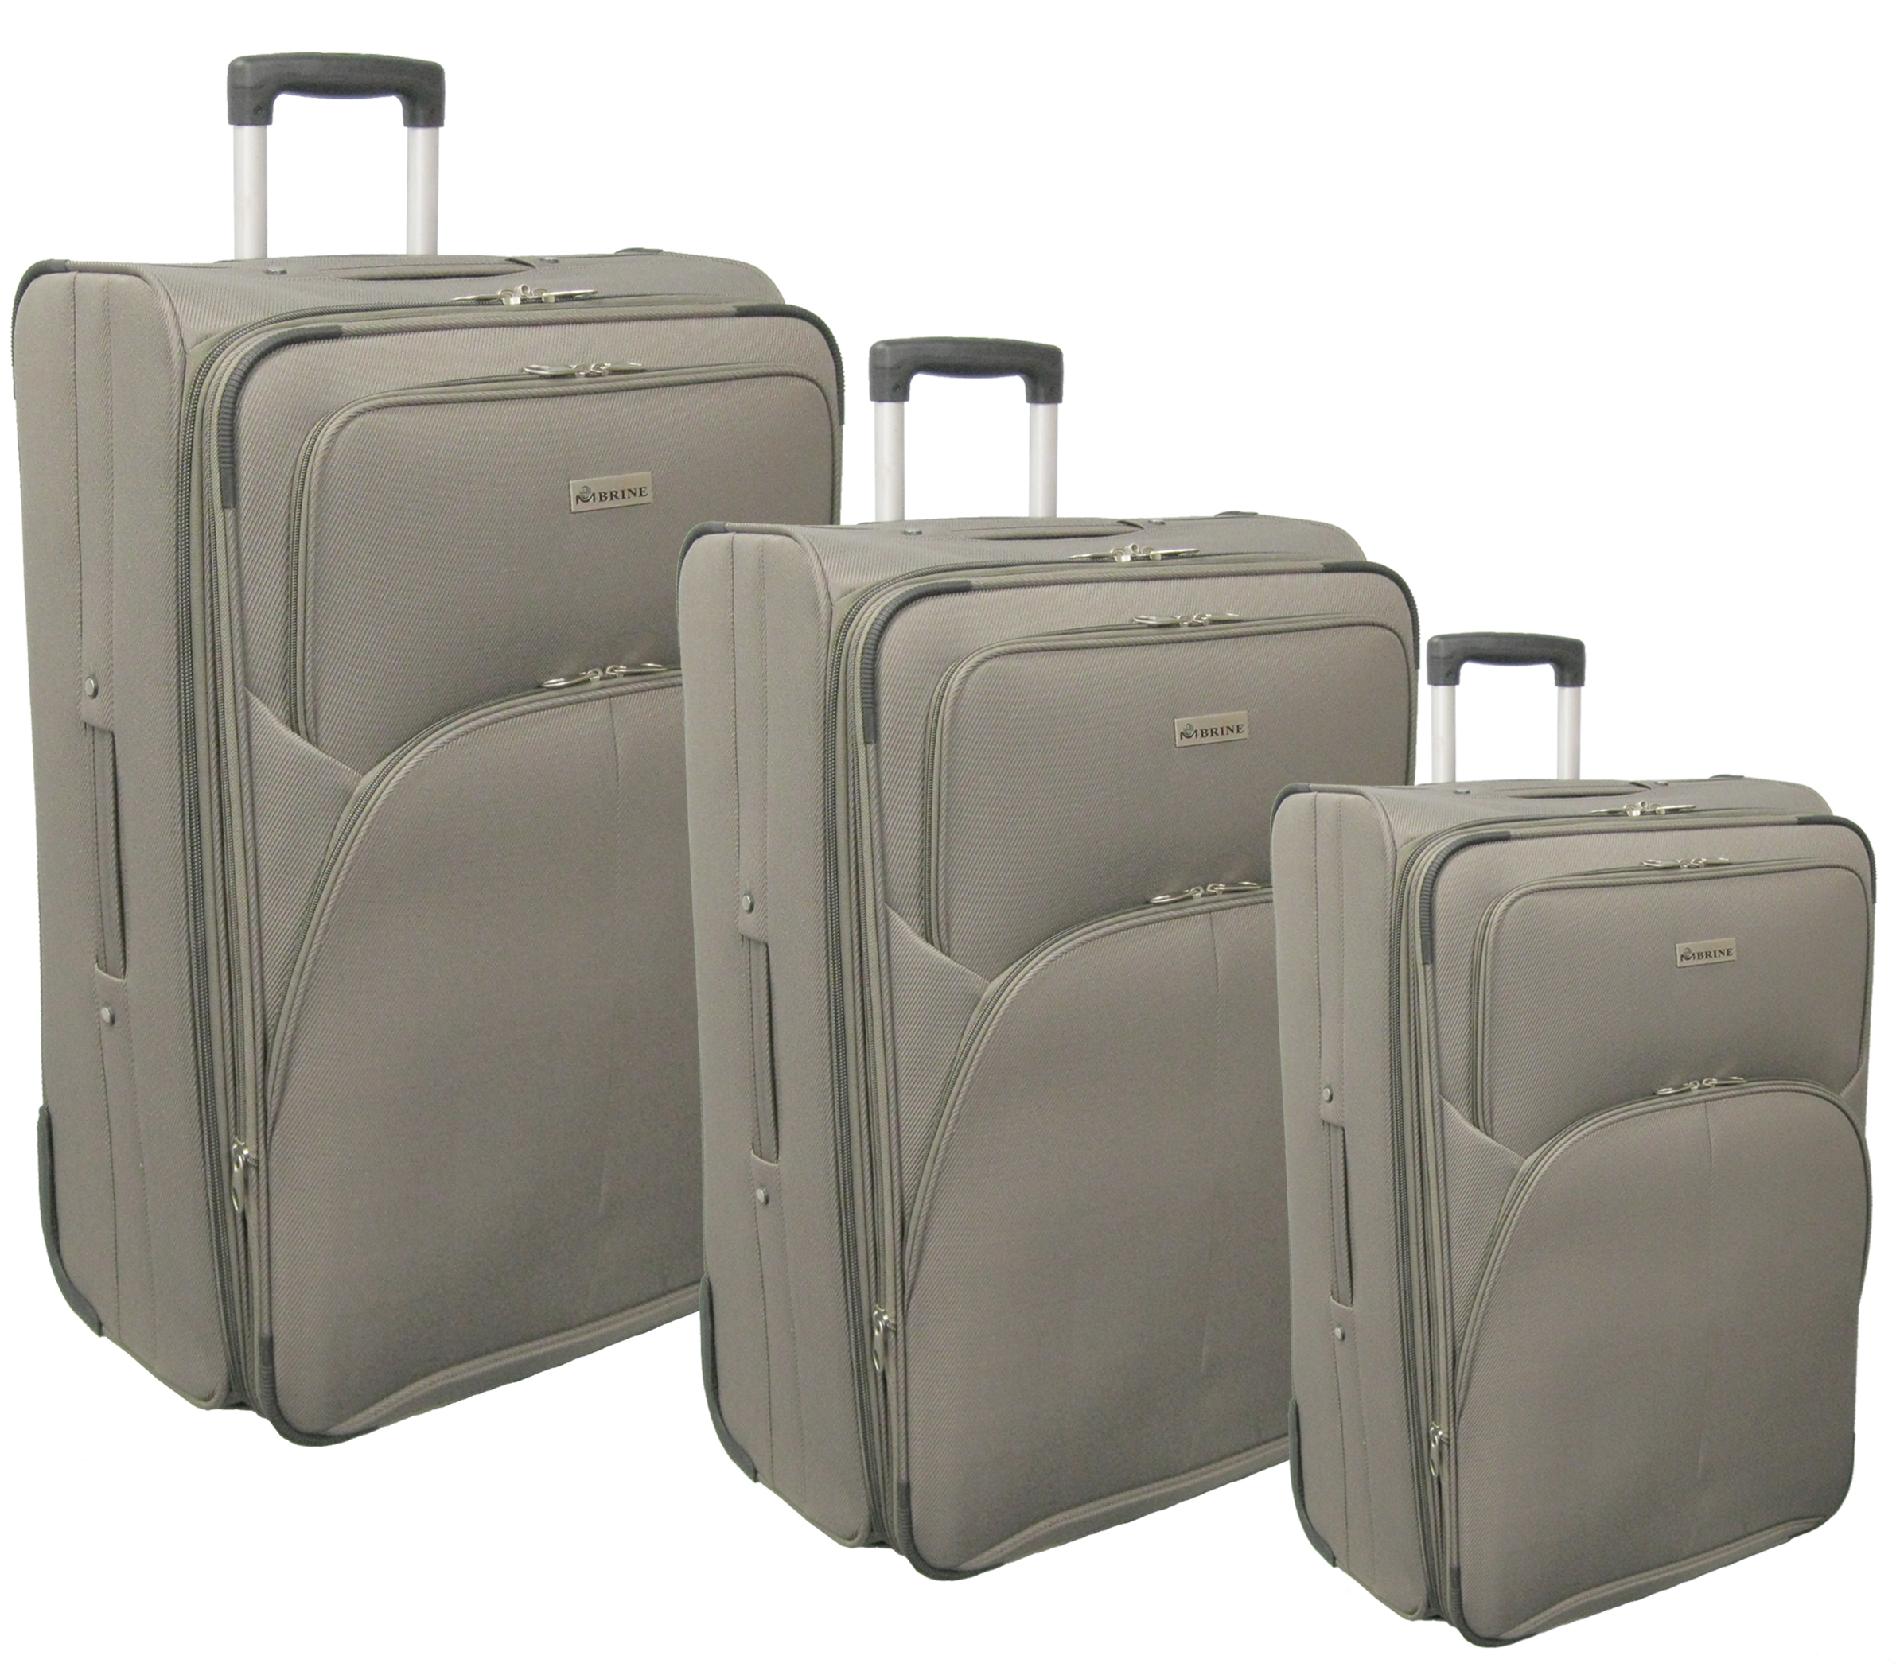 McBRINE Light weight 3 pc soft sided luggage set on inline wheels